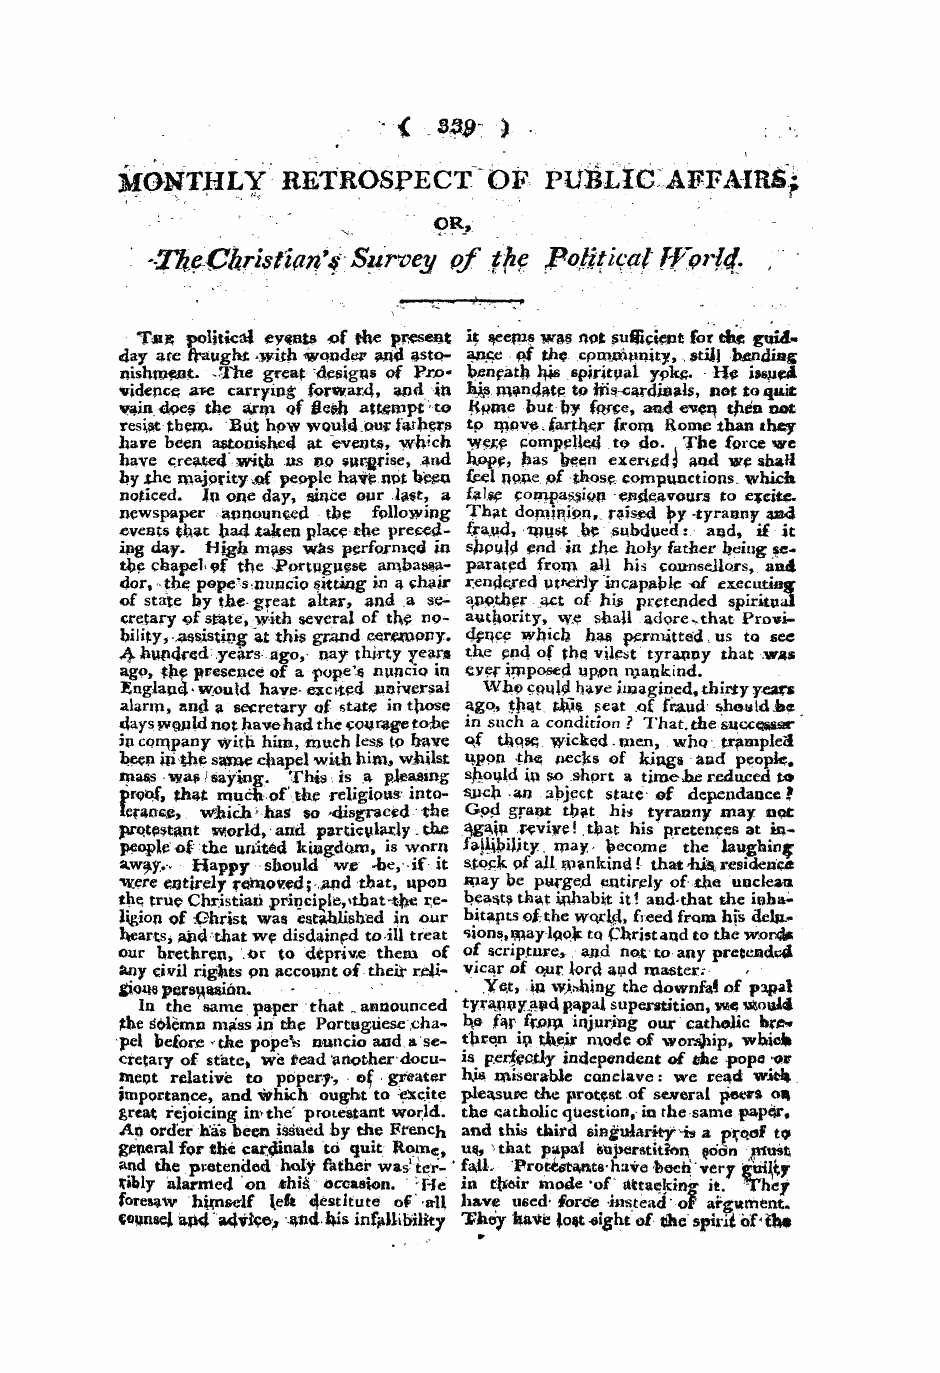 Monthly Repository (1806-1838) and Unitarian Chronicle (1832-1833): F Y, 1st edition - V 1 If0nthly Retrospect Of Pljilig Affair^ ¦Th&Chri$Ti(Iri4 Survey Of The Jpohti ^ Aj" Ffpm